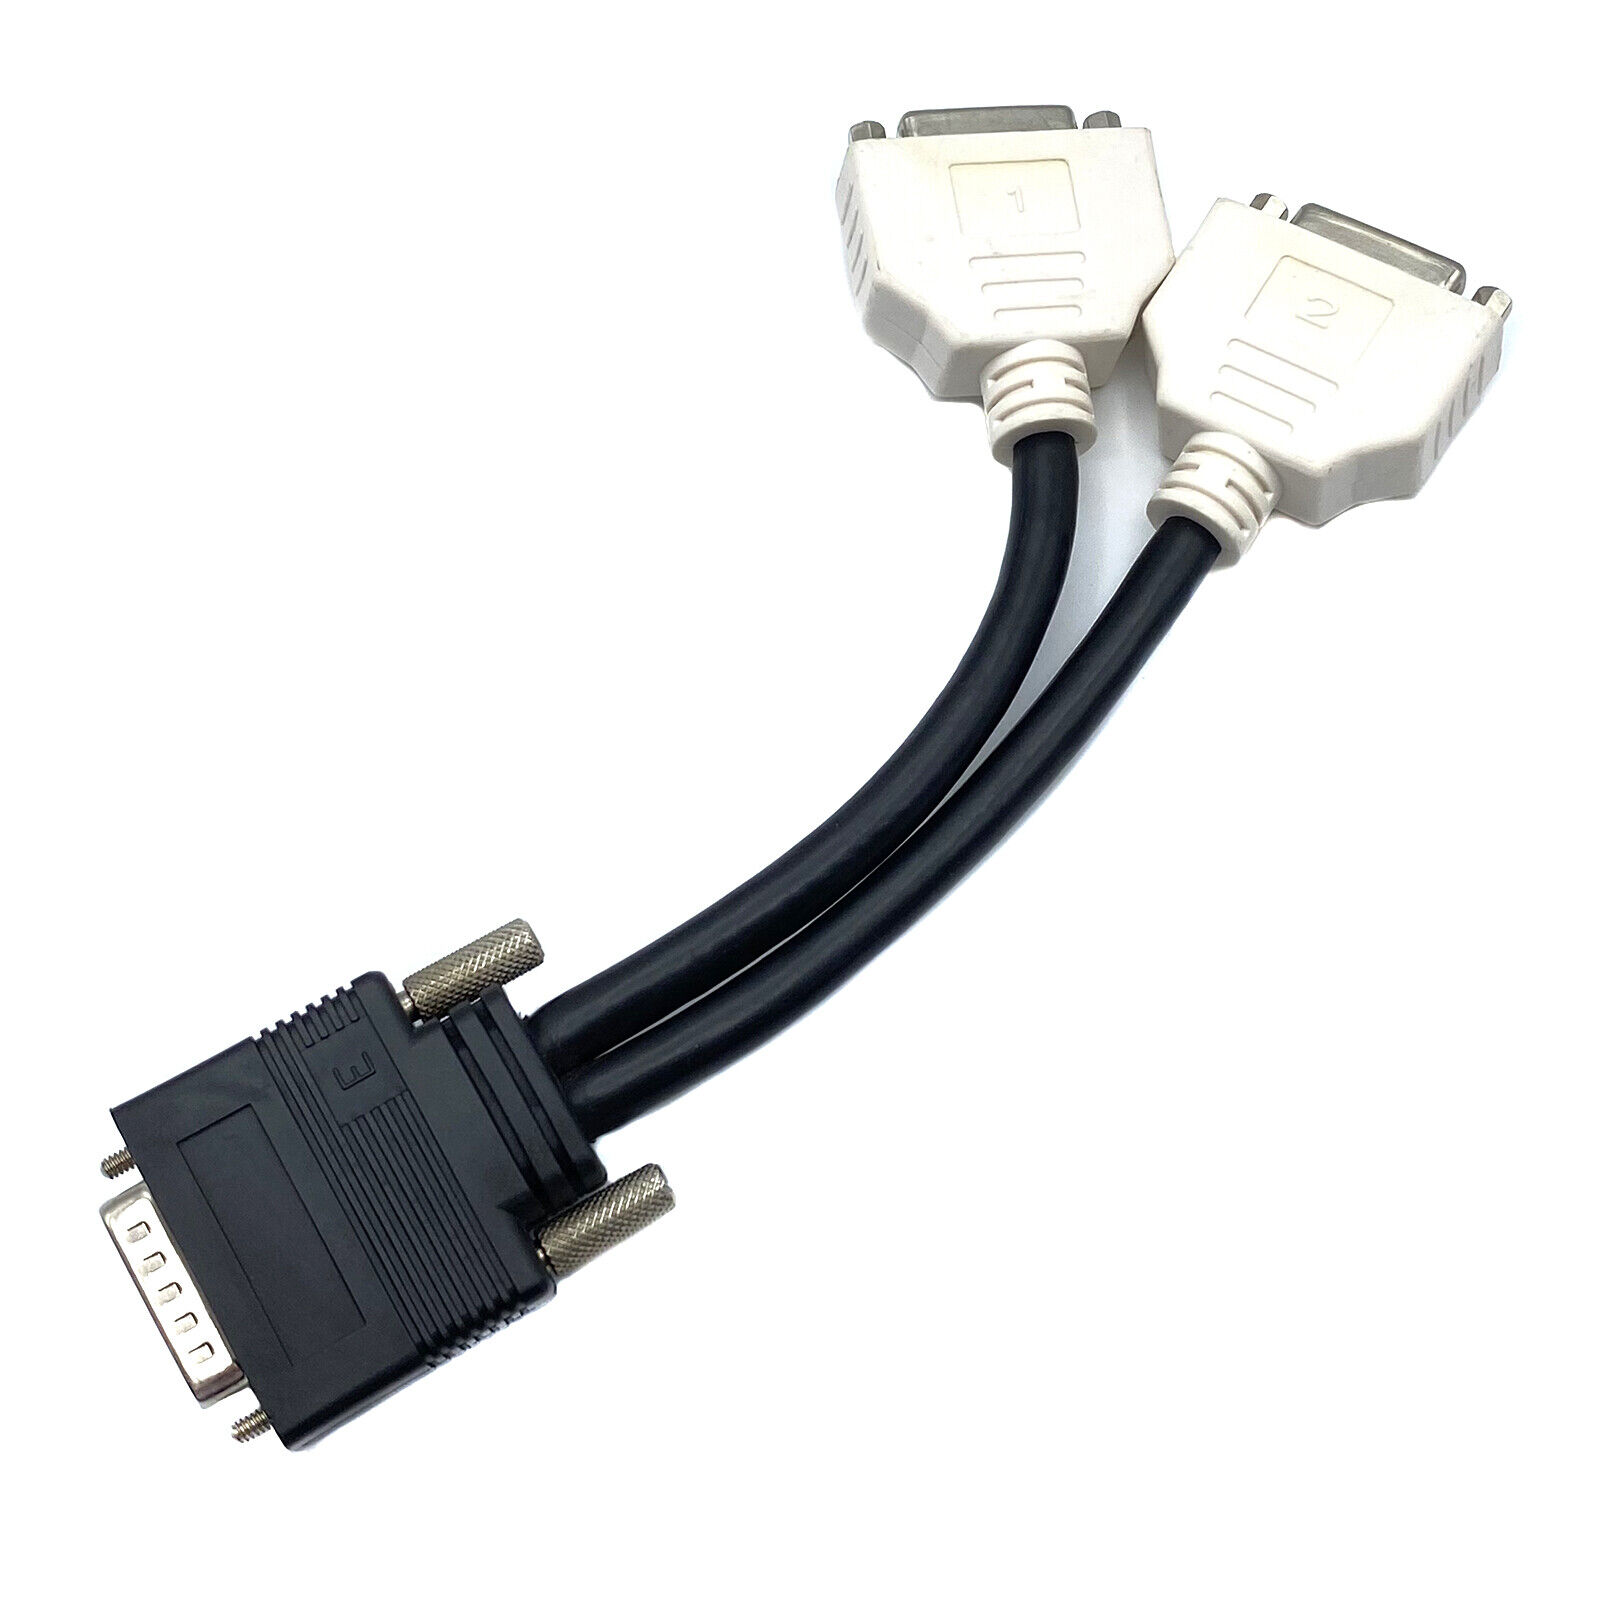 Lot of 2 Genuine Copartner 20276 DMS-60 DVI-I Dual Link Splitter Y Adapter Cable